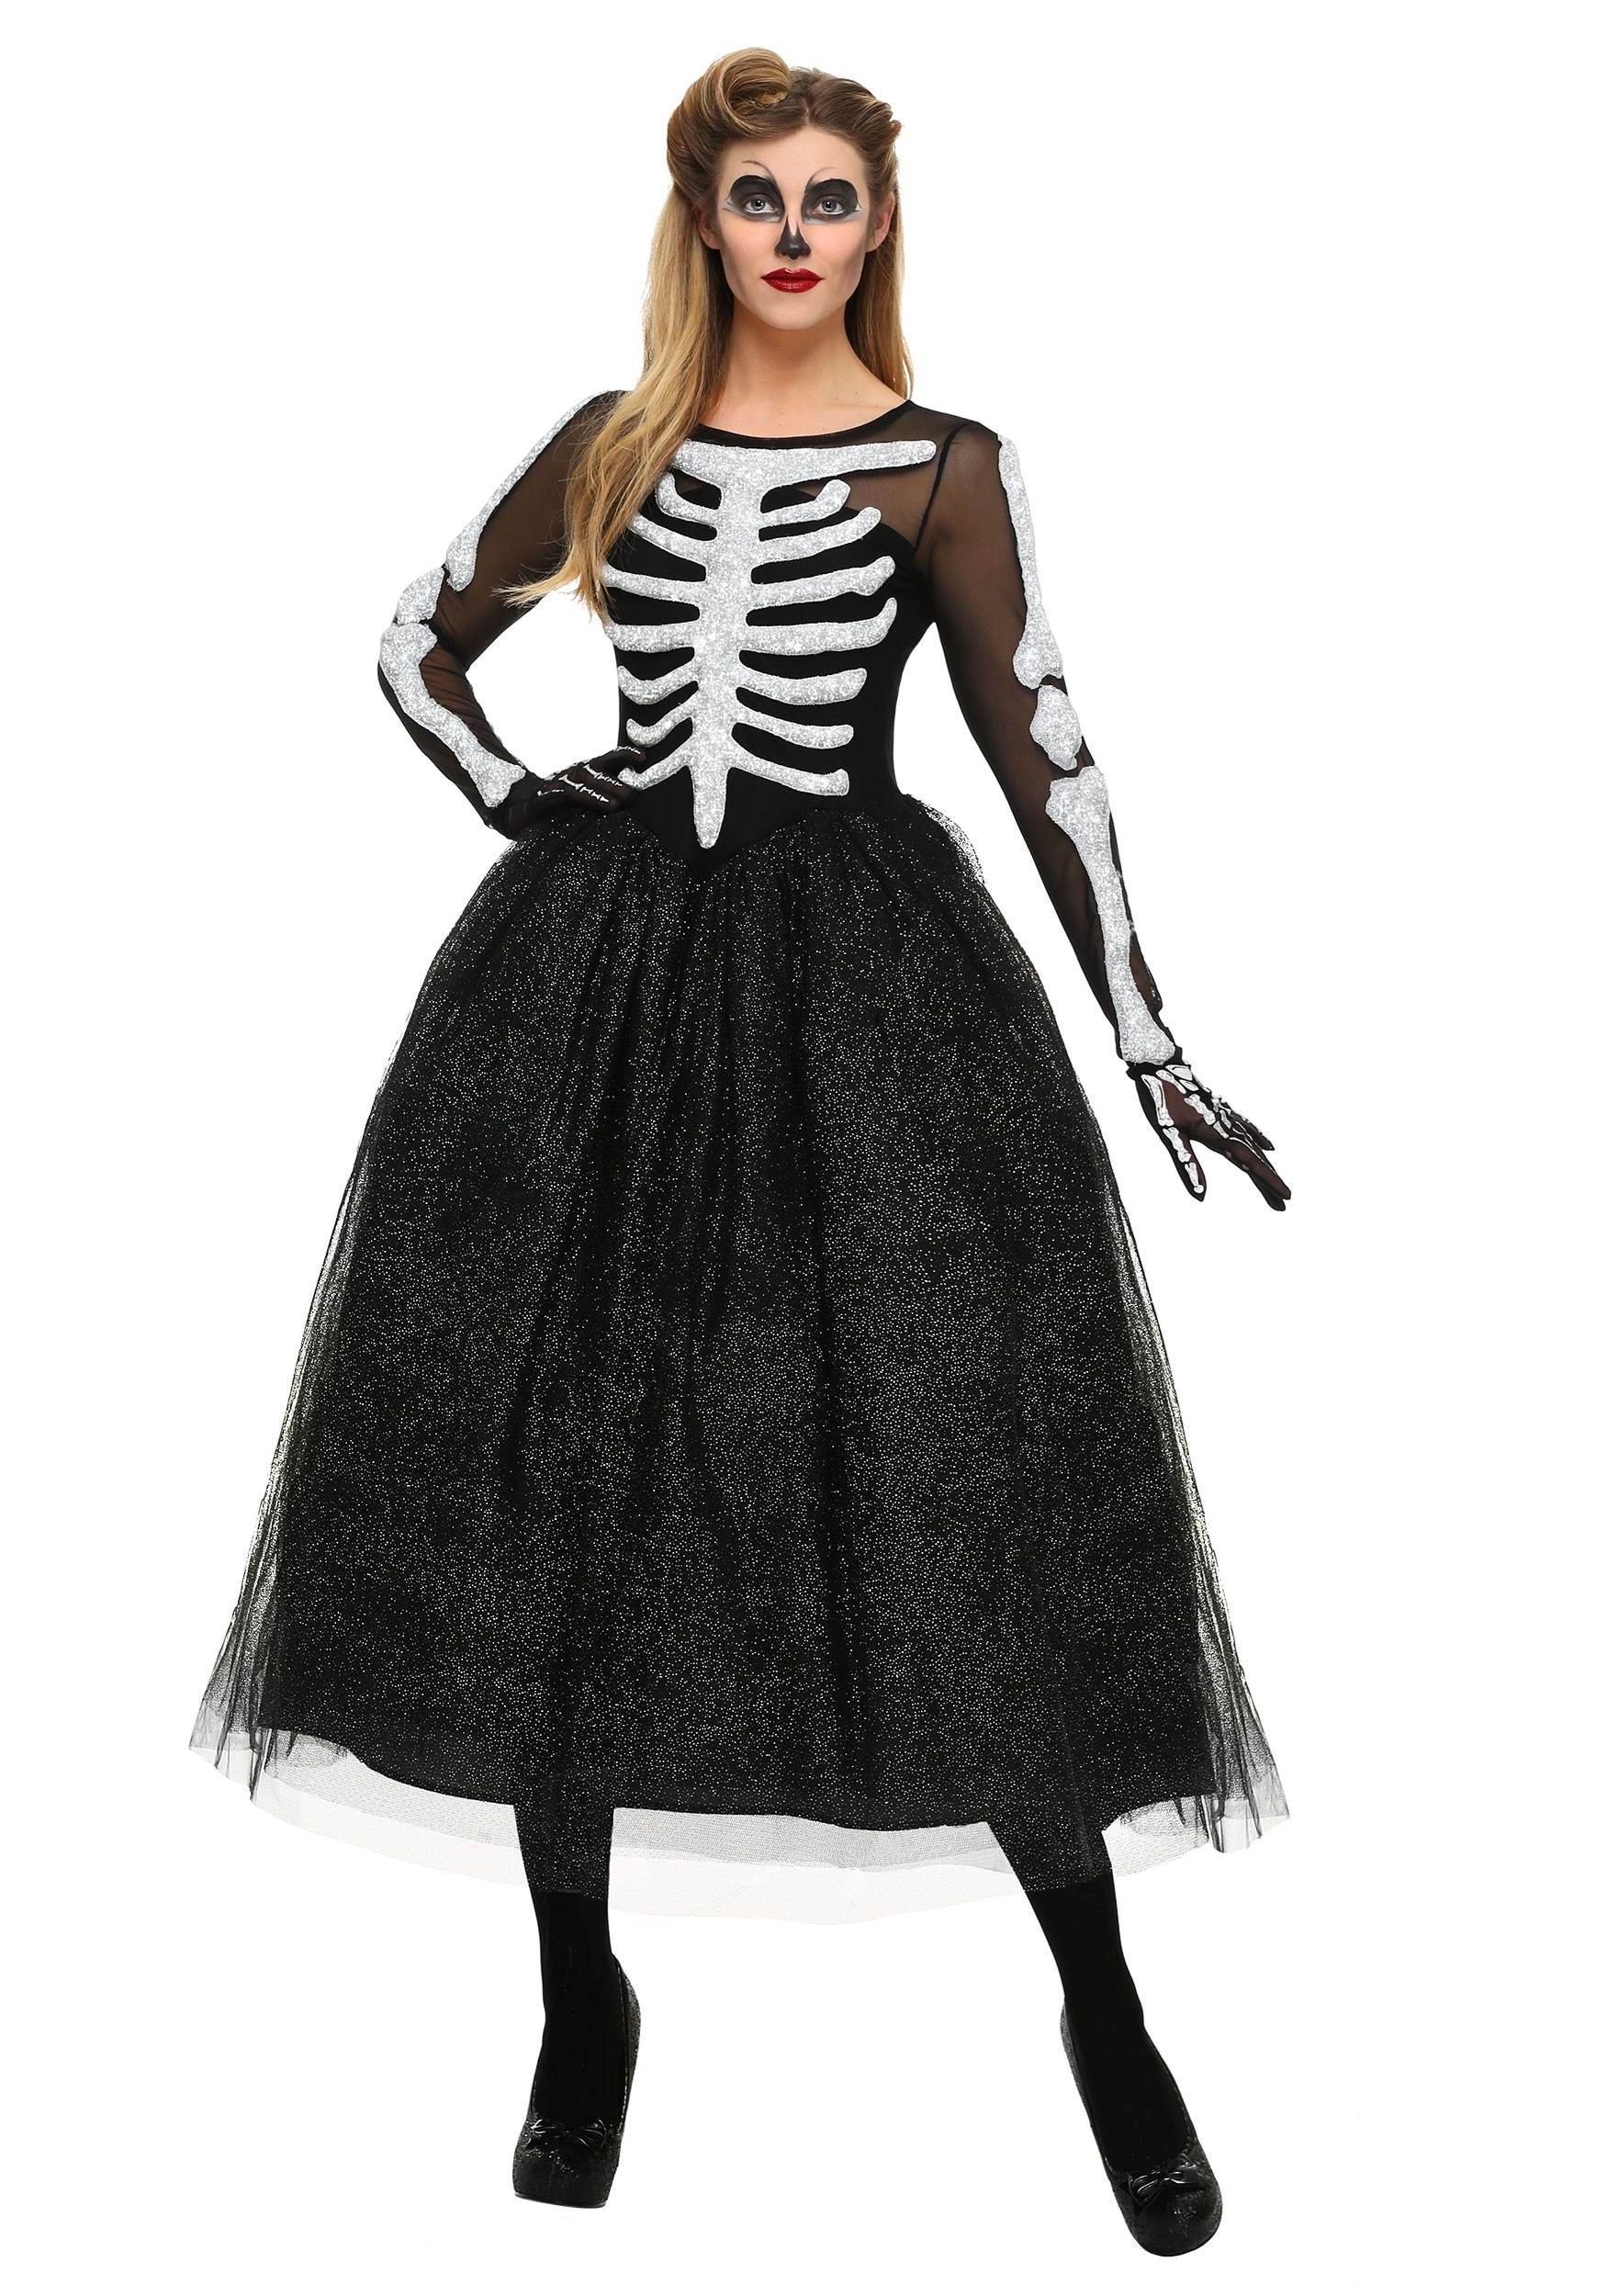 Ladies Halloween Costume Ideas
 Women s Skeleton Beauty Plus Size Costume 1X 2X 3X 4X